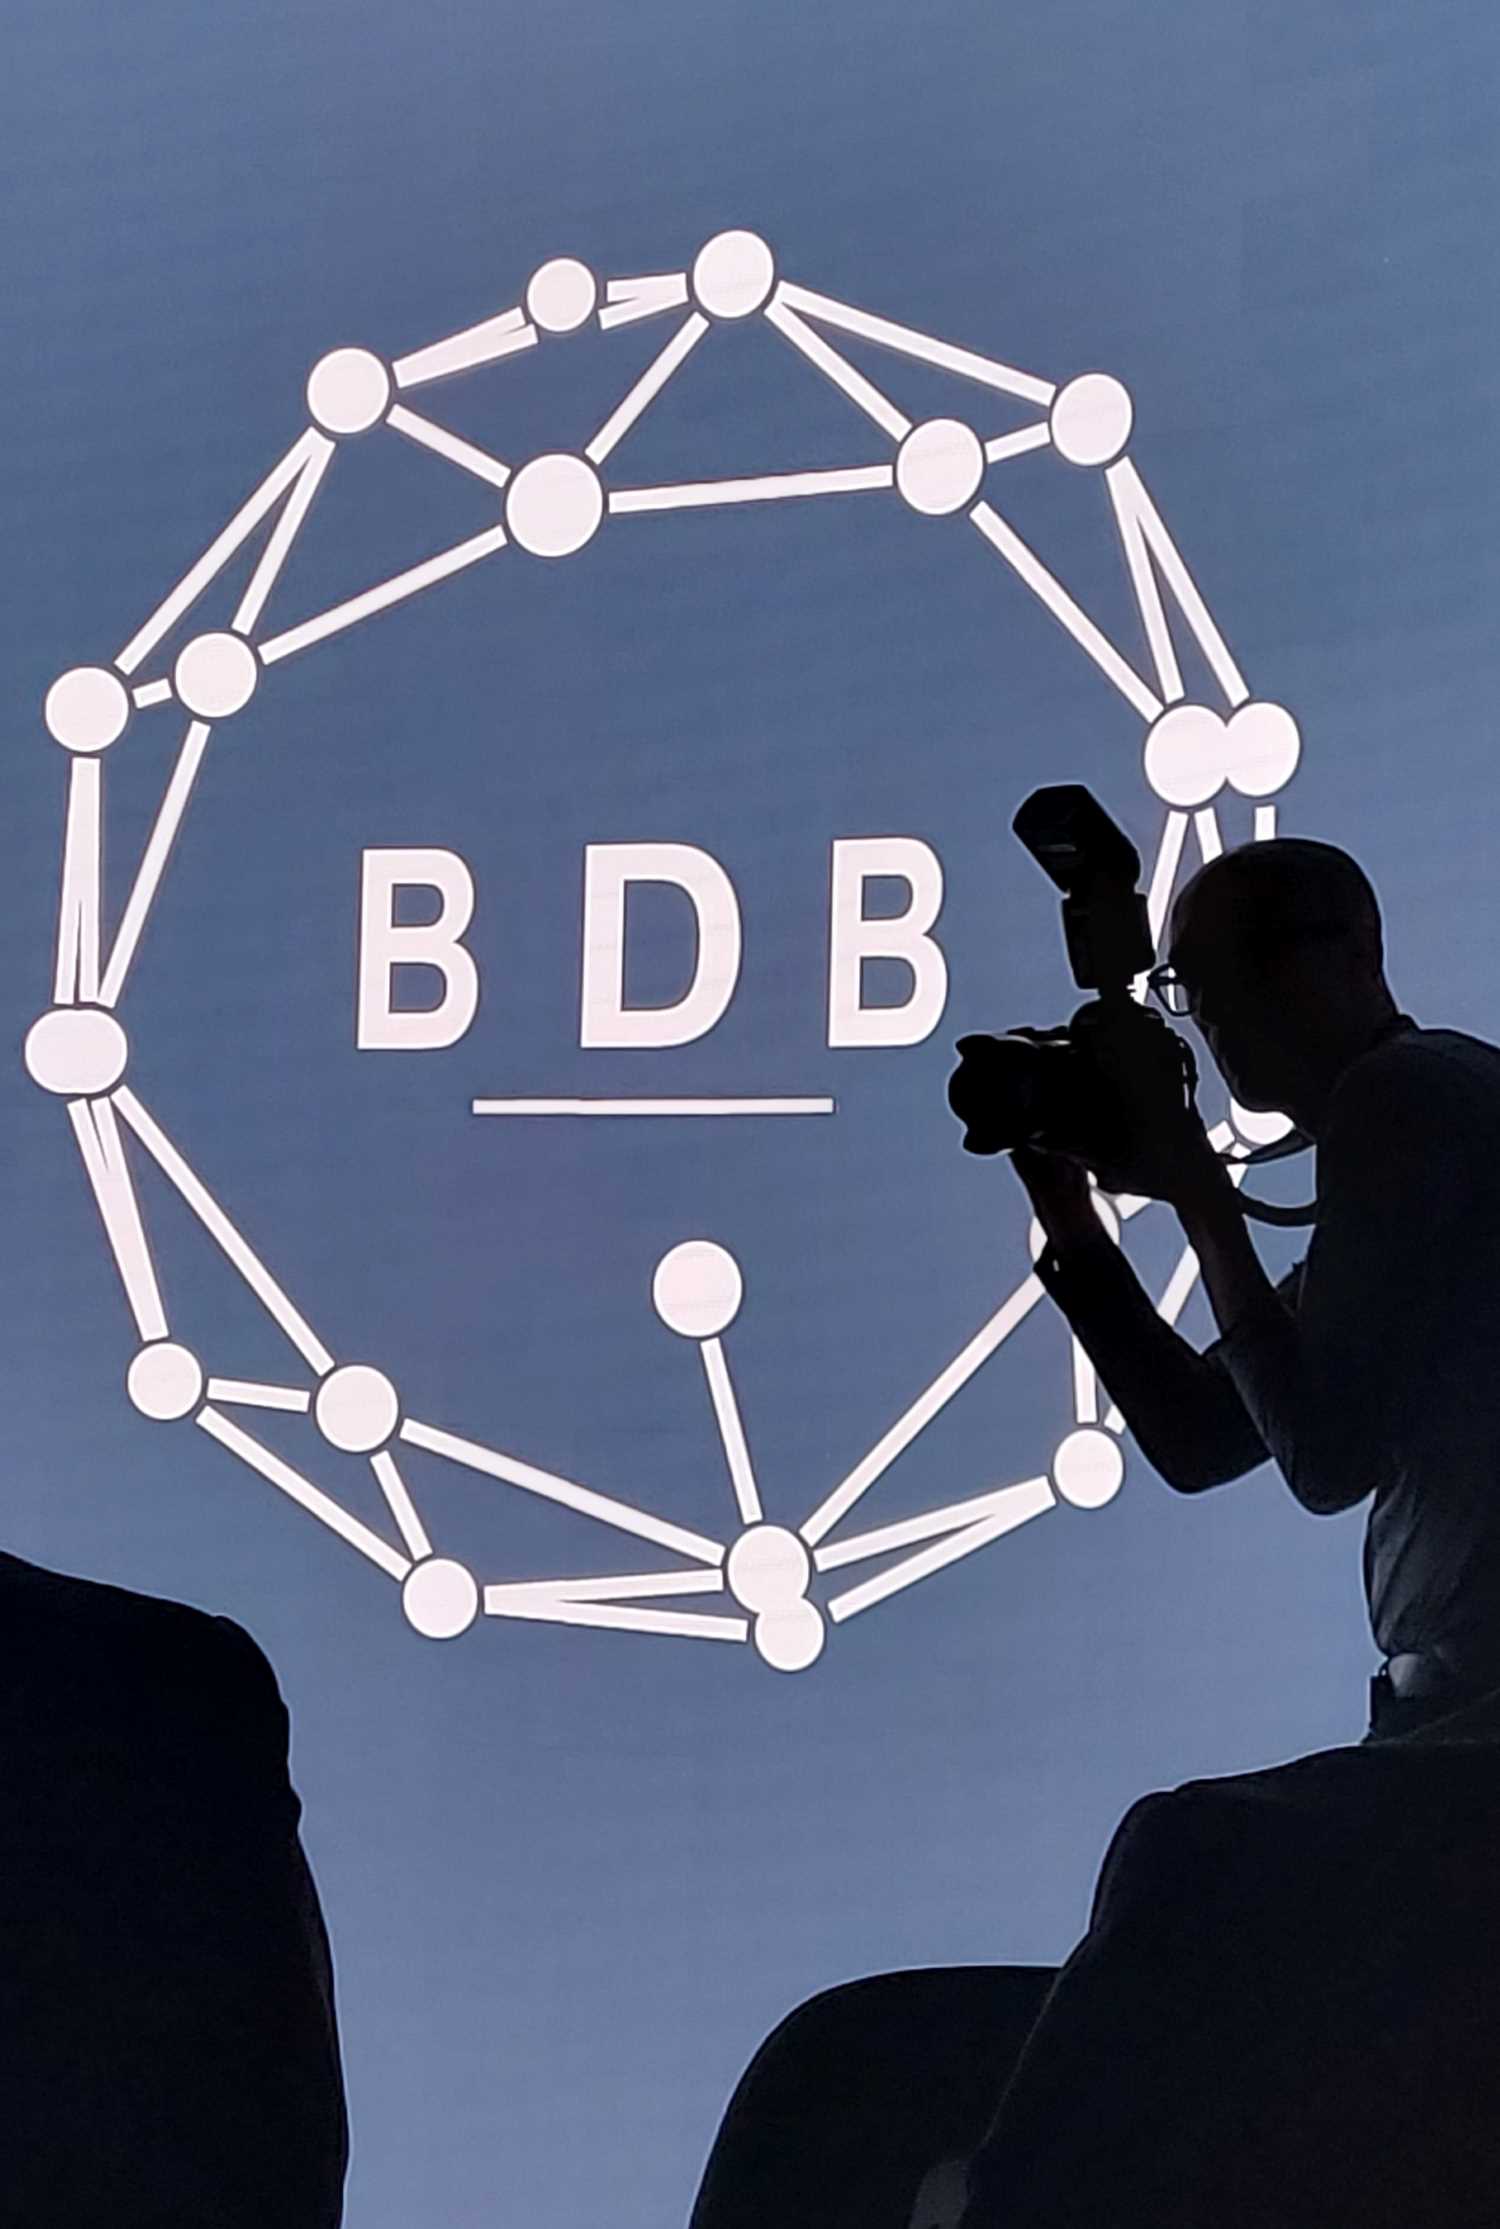 BDB IBDC NETWORK